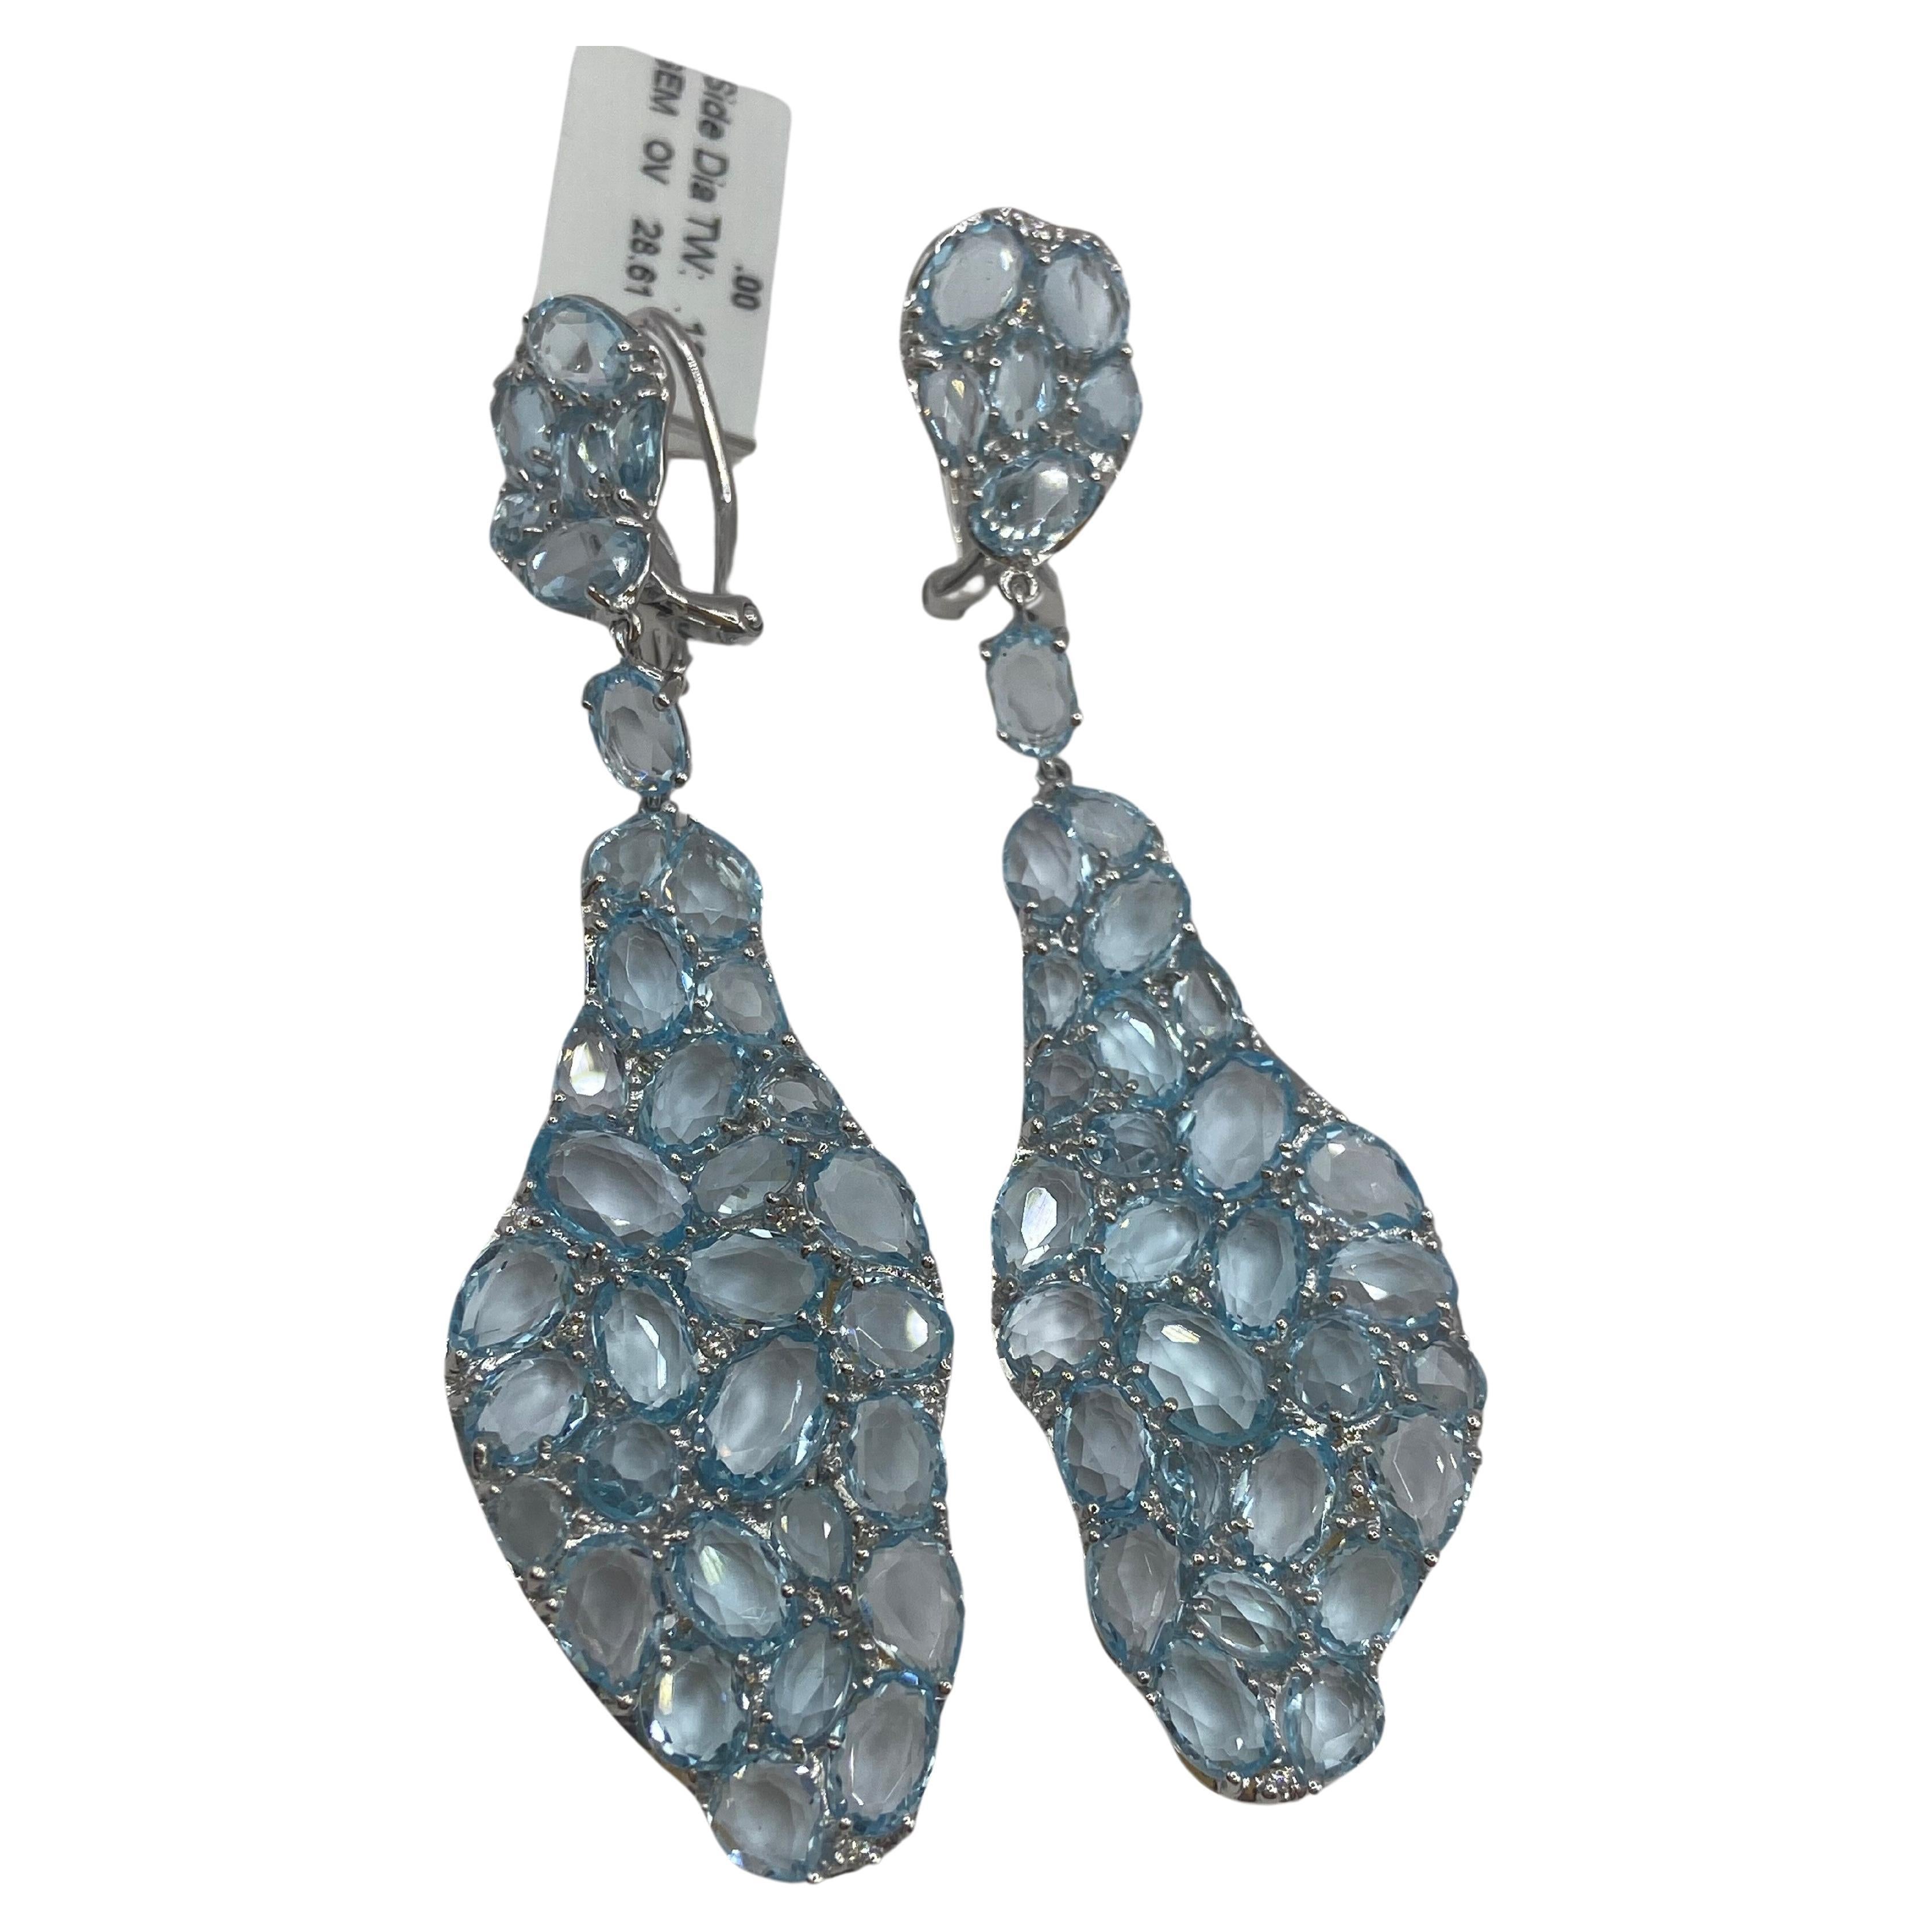 28.74ct Rose Cut Blue Topaz Earrings in 18KT White Gold